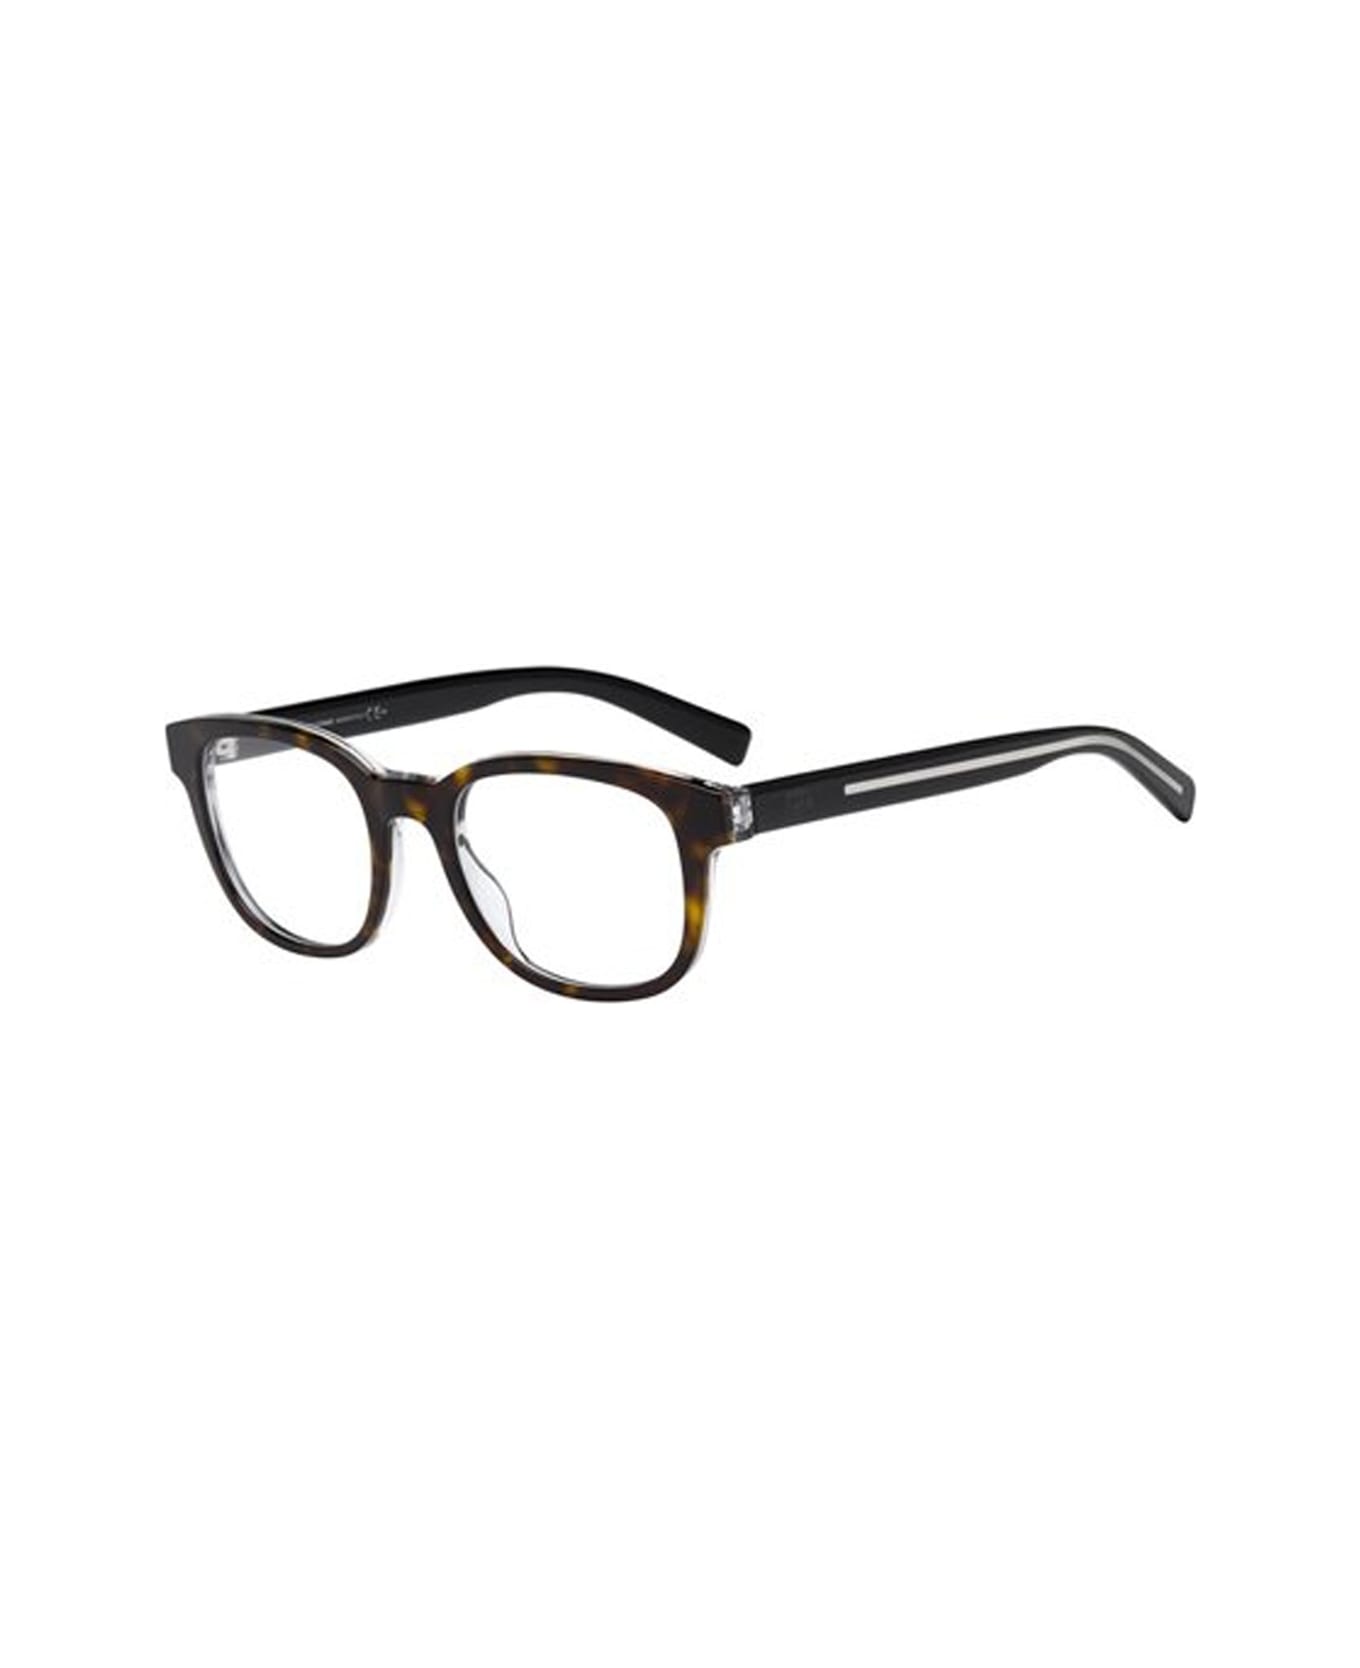 Dior Eyewear Blacktie 202 Glasses - Marrone アイウェア